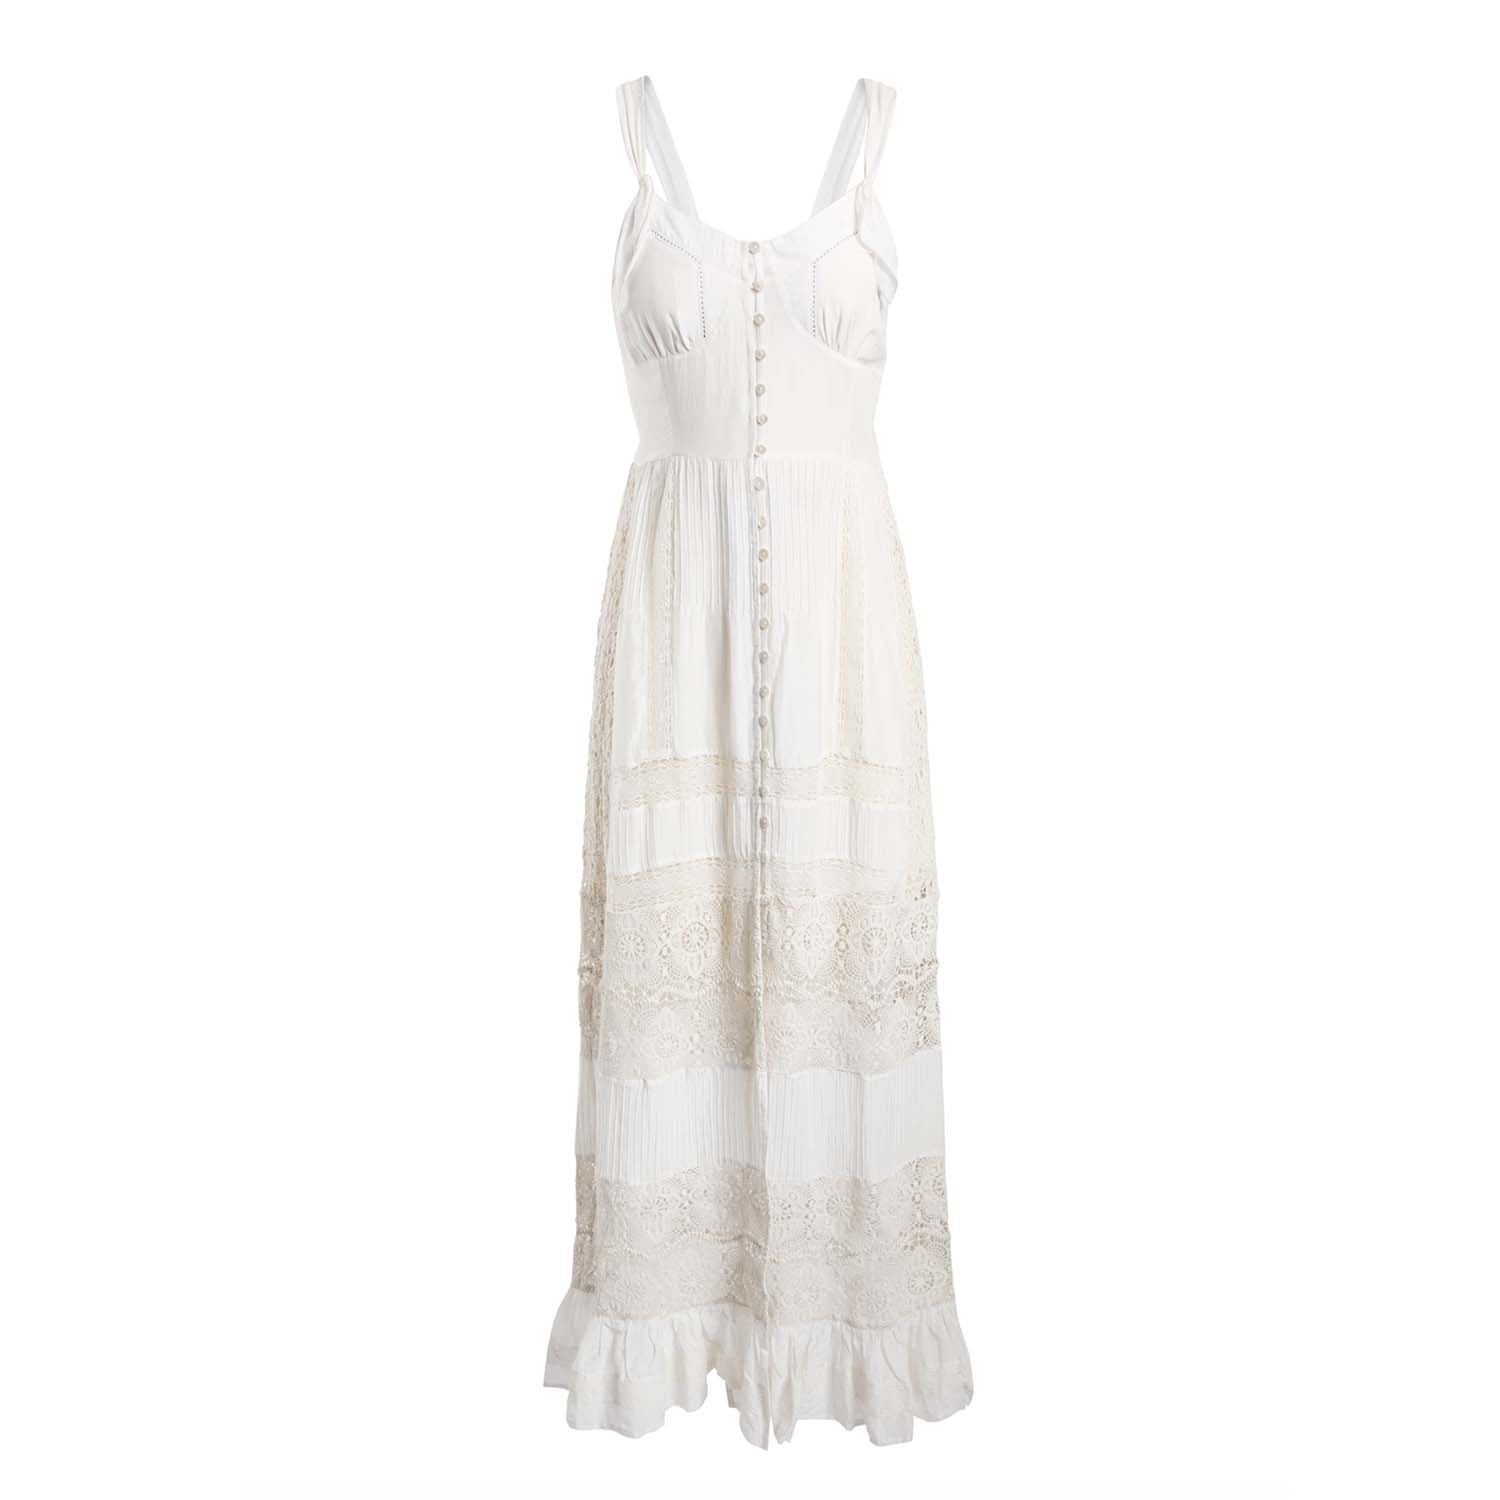 Secret Mission Women's White Marina Dress - Organic Cotton